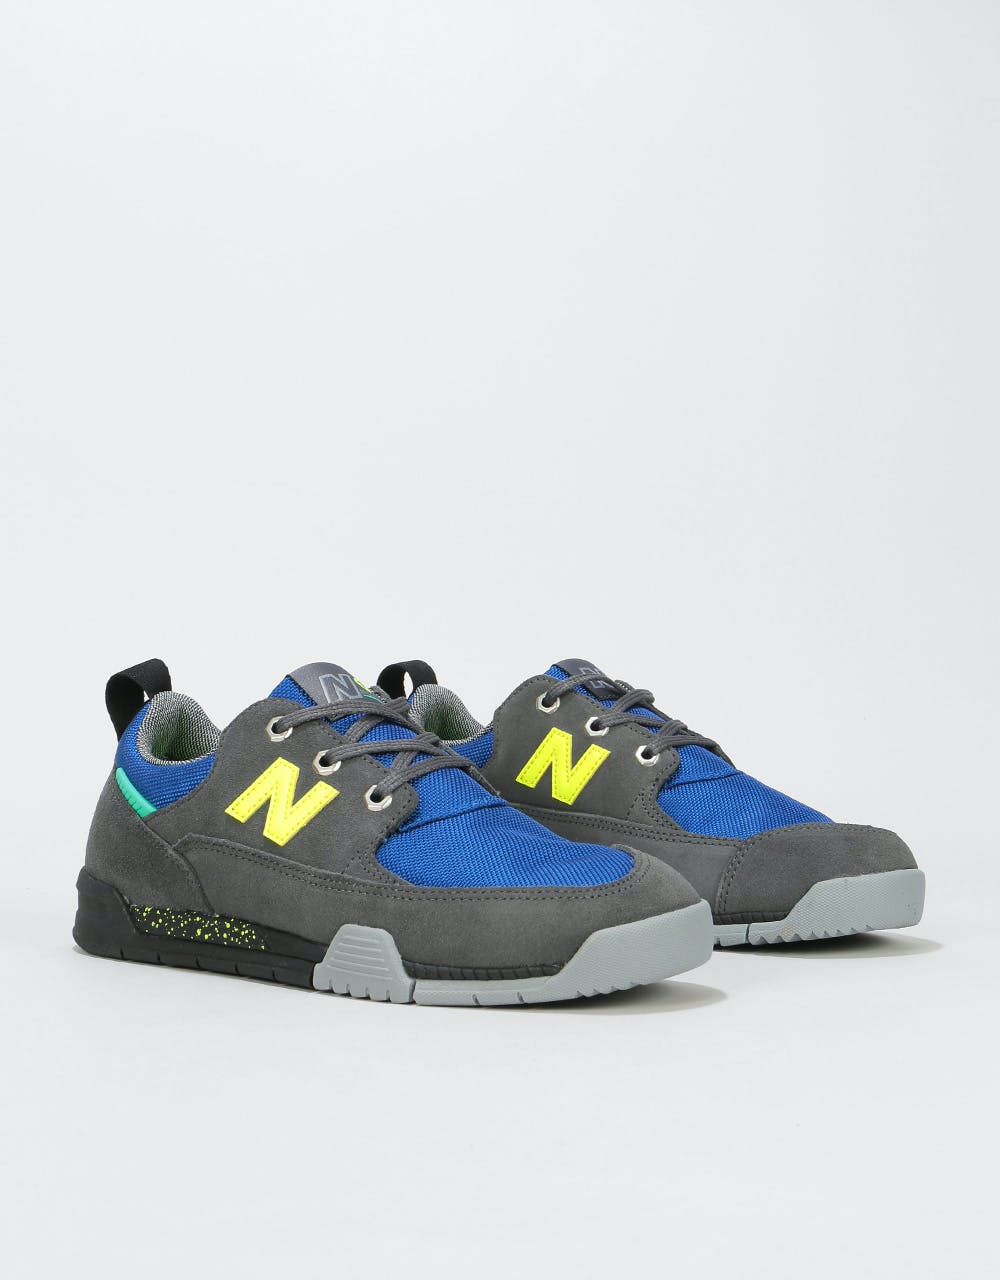 New Balance AC 562 Shoes - Grey/Royal